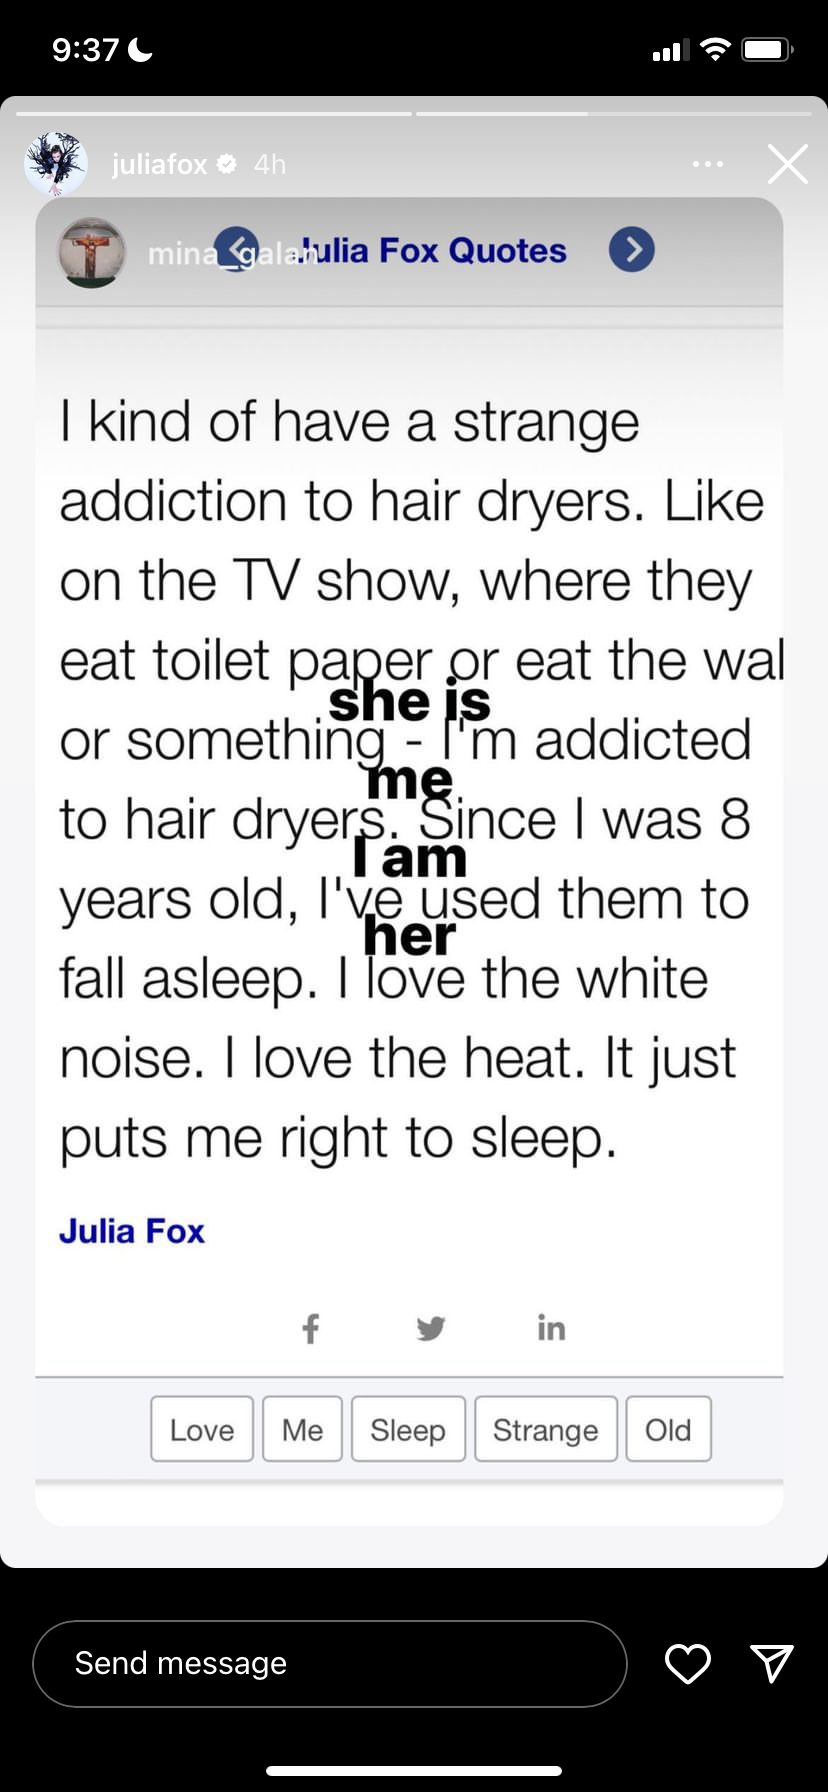 Julia Fox admits her strange addiction